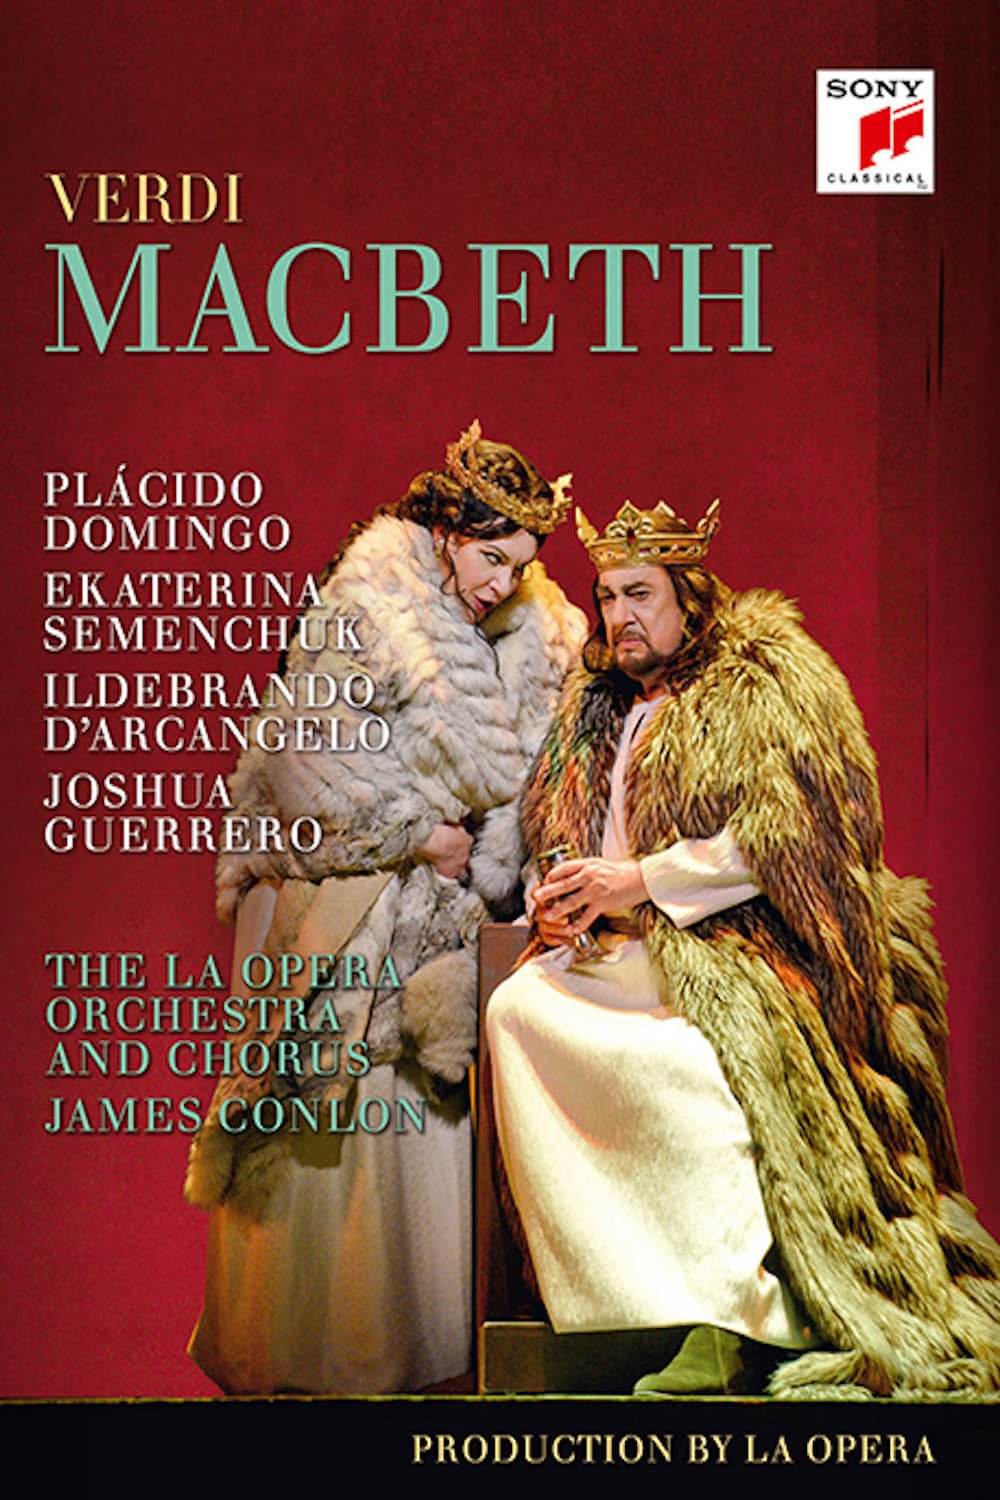 Macbeth (2016)